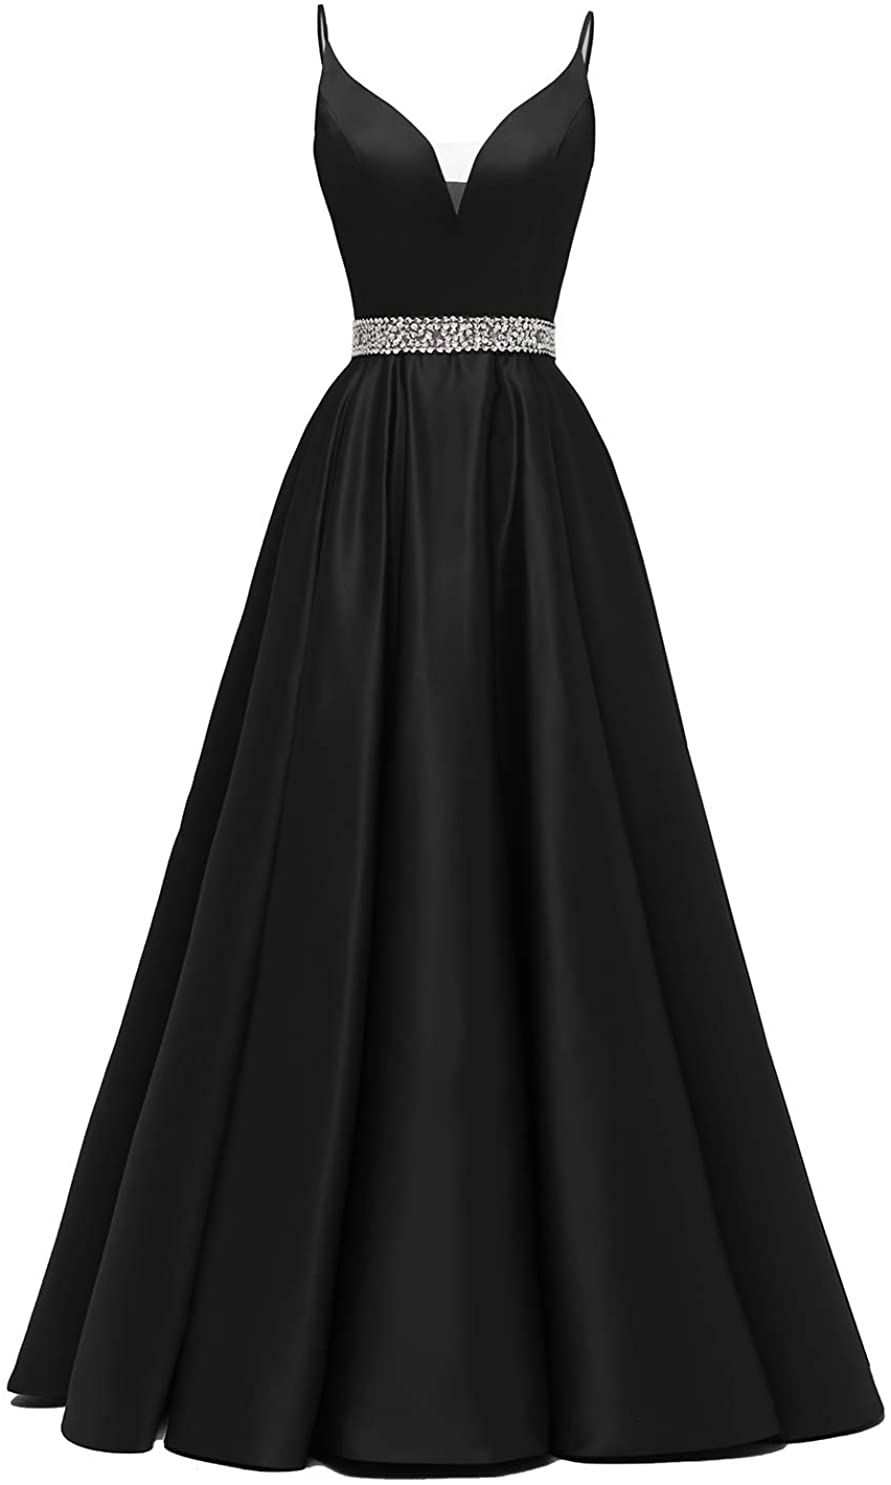 Yexinbridal Sleeveless A-Line Black Formal Gown